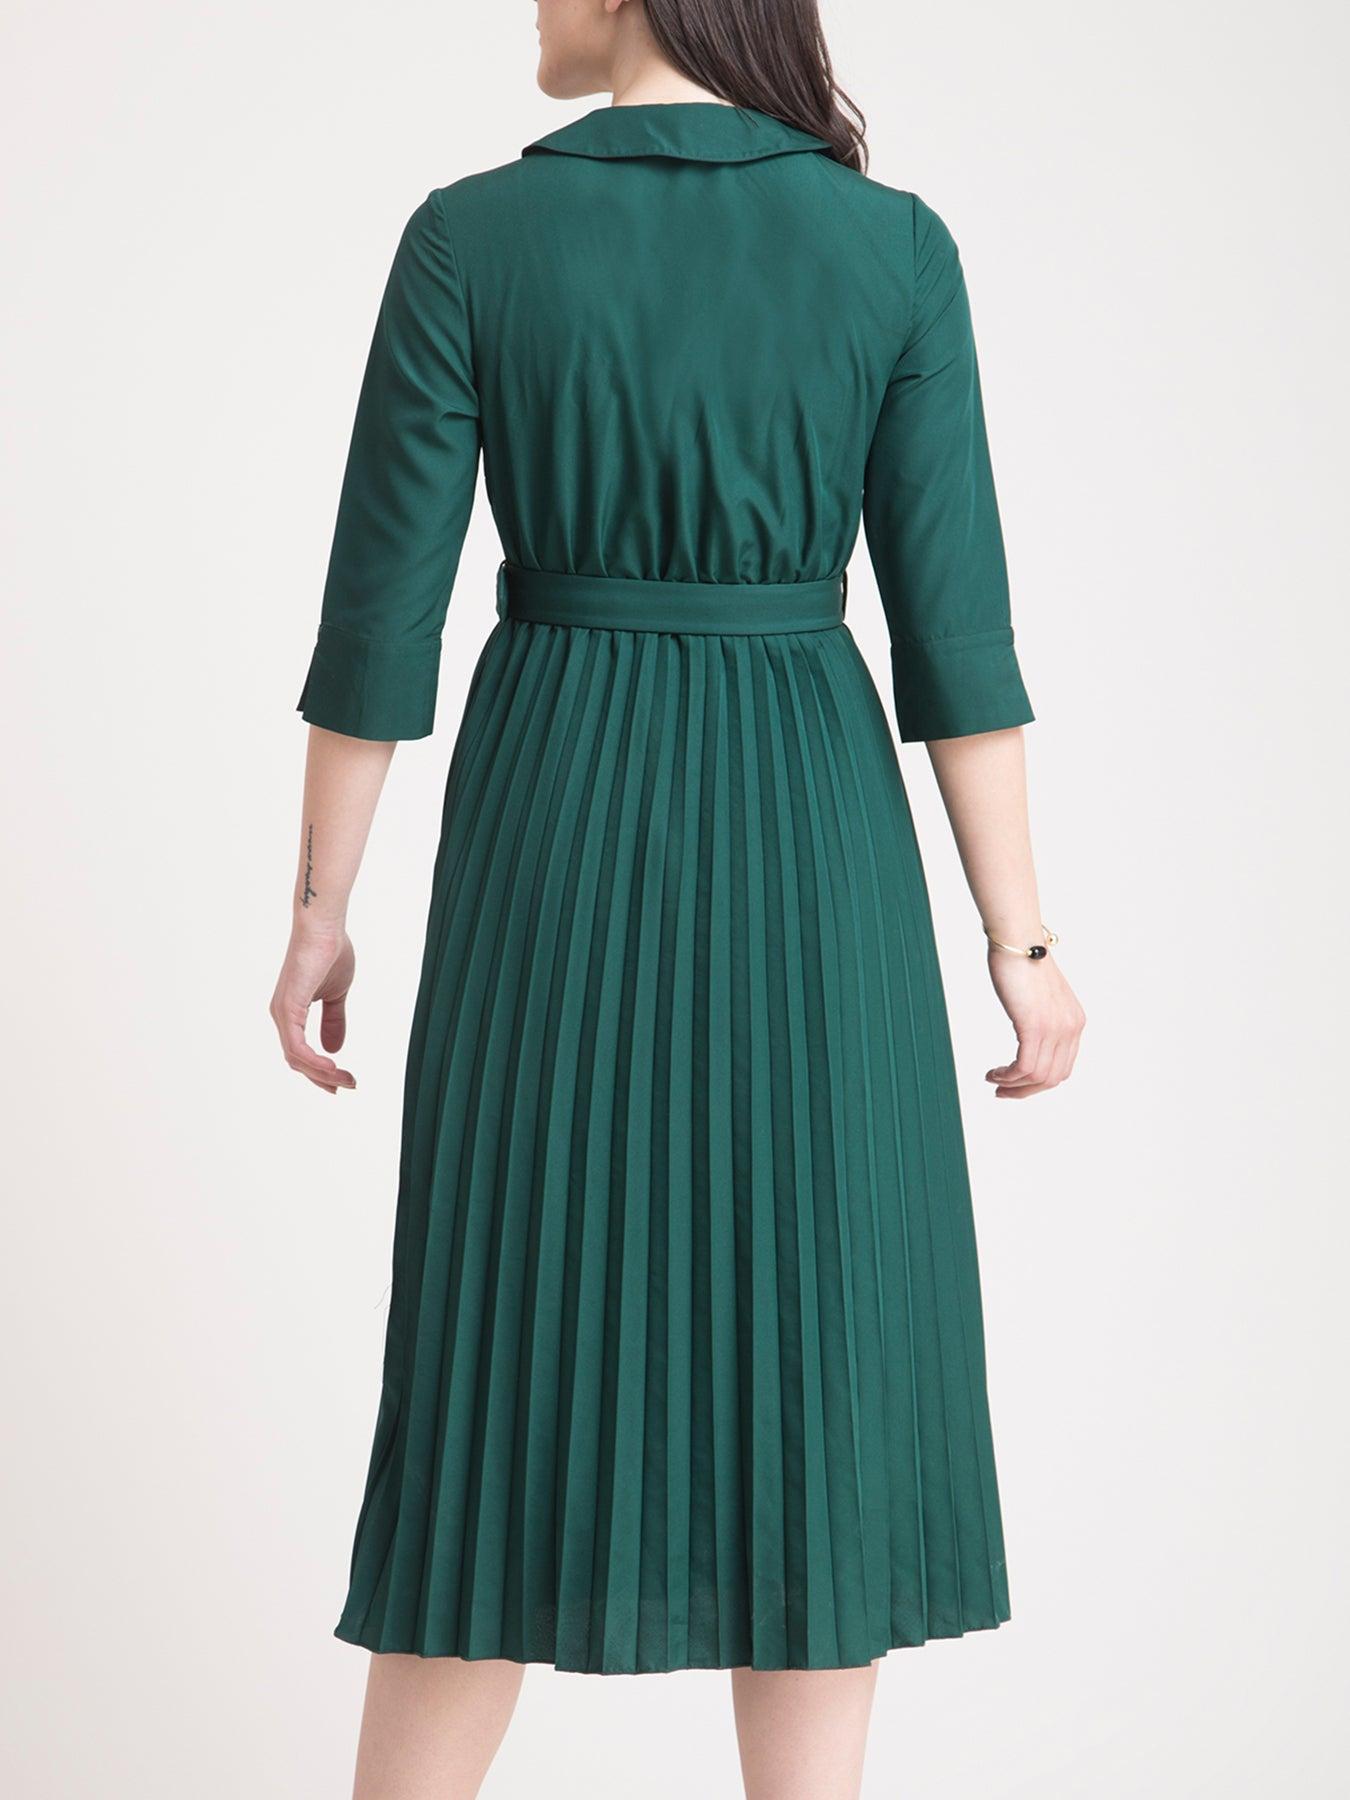 Peter Pan Collar Pleated A Line Dress - Green| Formal Dresses